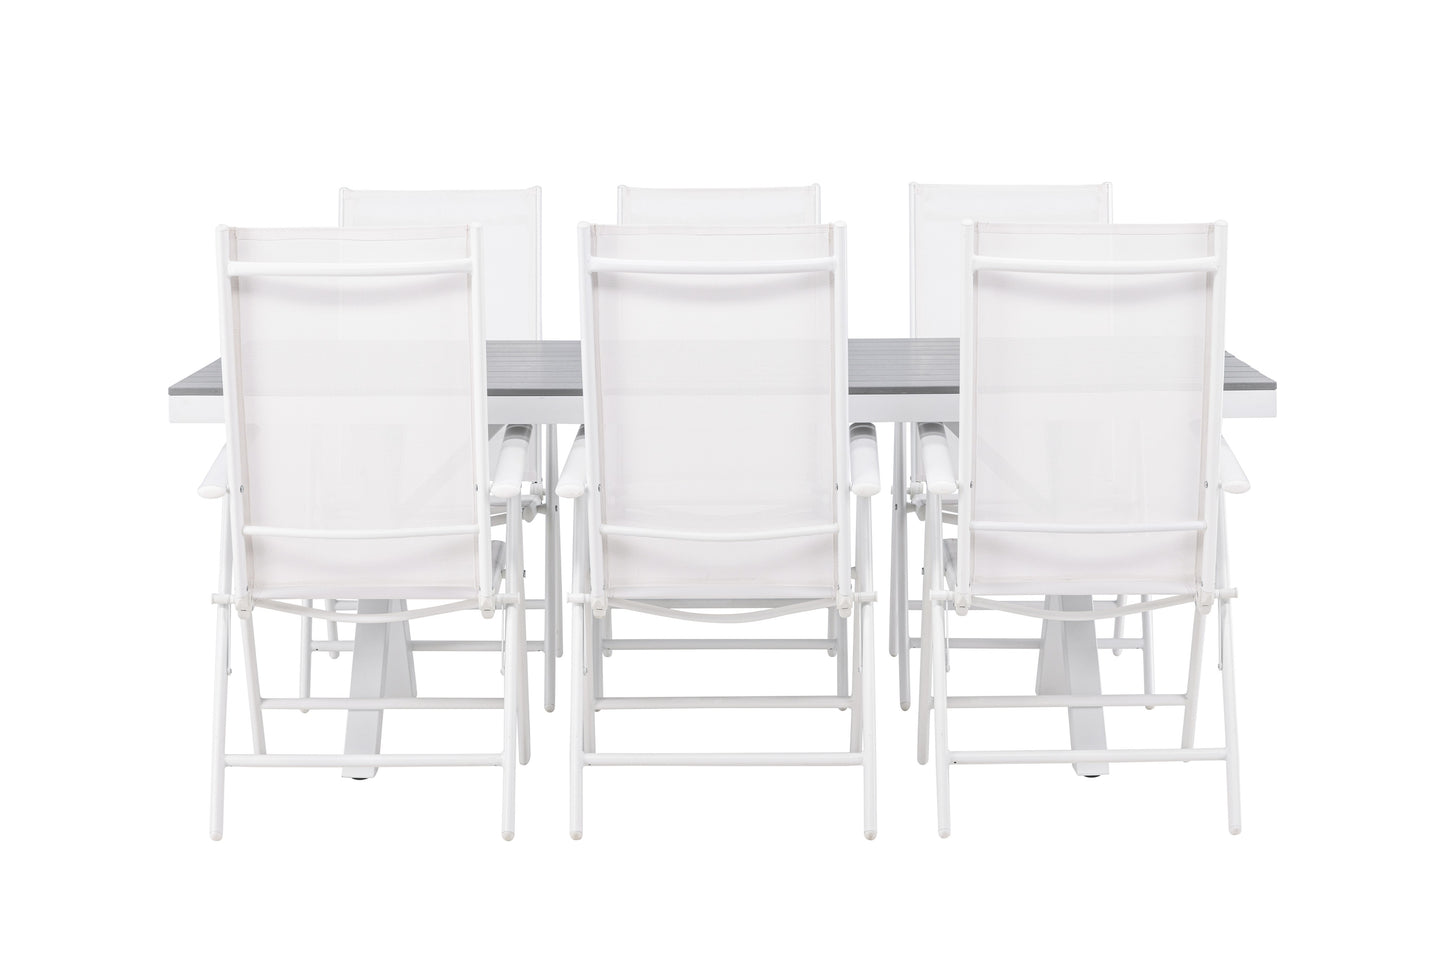 Garcia - Spisebord, Aluminium - Hvid / Lysegrå Nonwood / Rektangulær 100*200* + Break stol Aluminium - Hvid / Tekstil